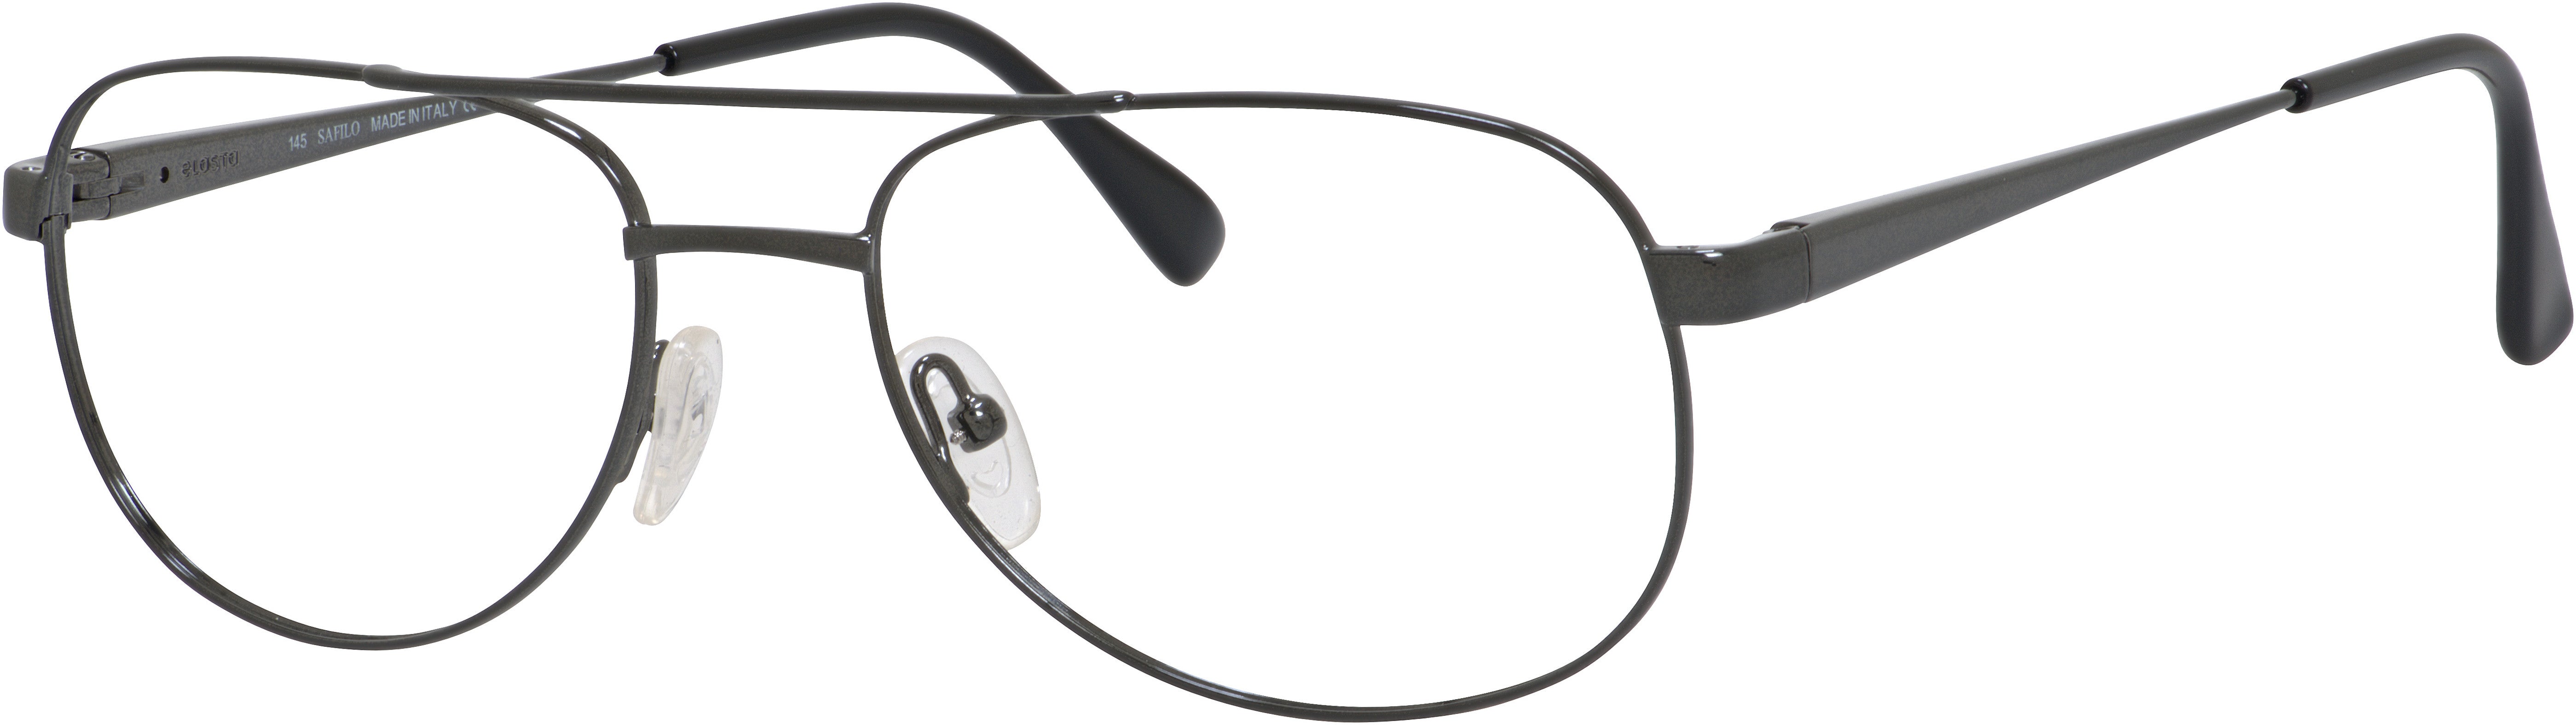  Elasta 7115 Aviator Eyeglasses 09LW-09LW  Gray (00 Demo Lens)